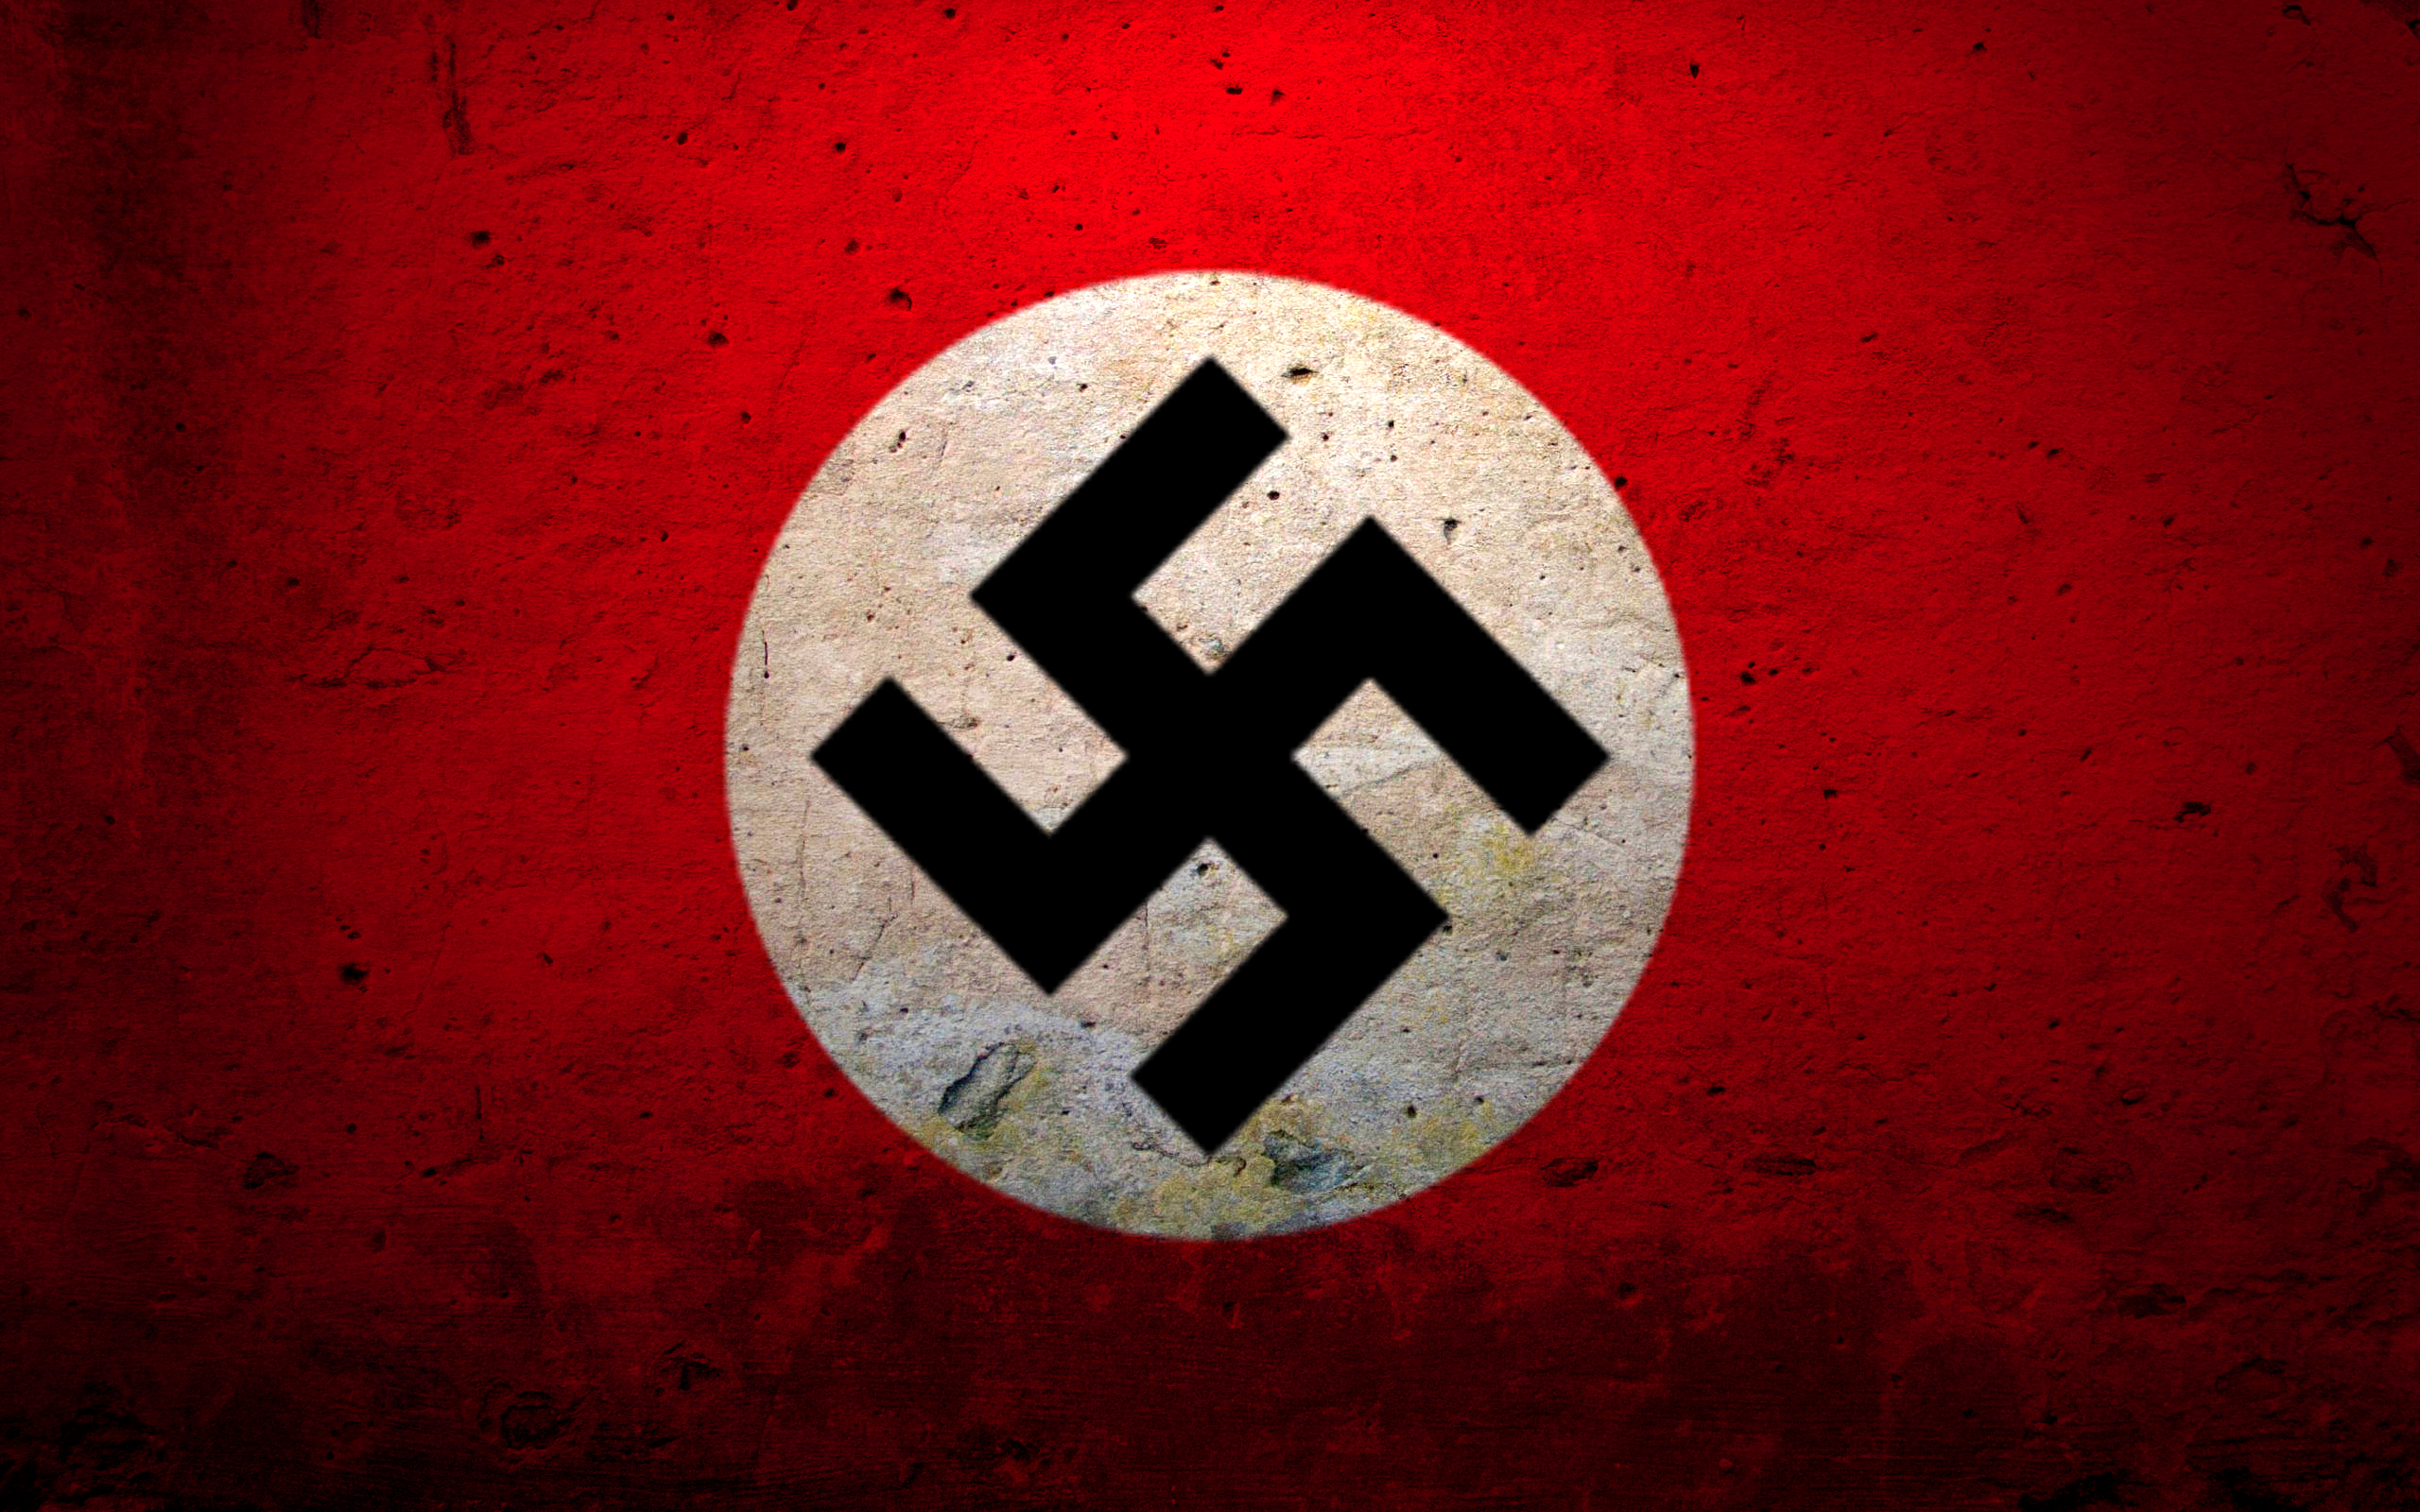 HD Nazi Wallpaper On Markinternational Info